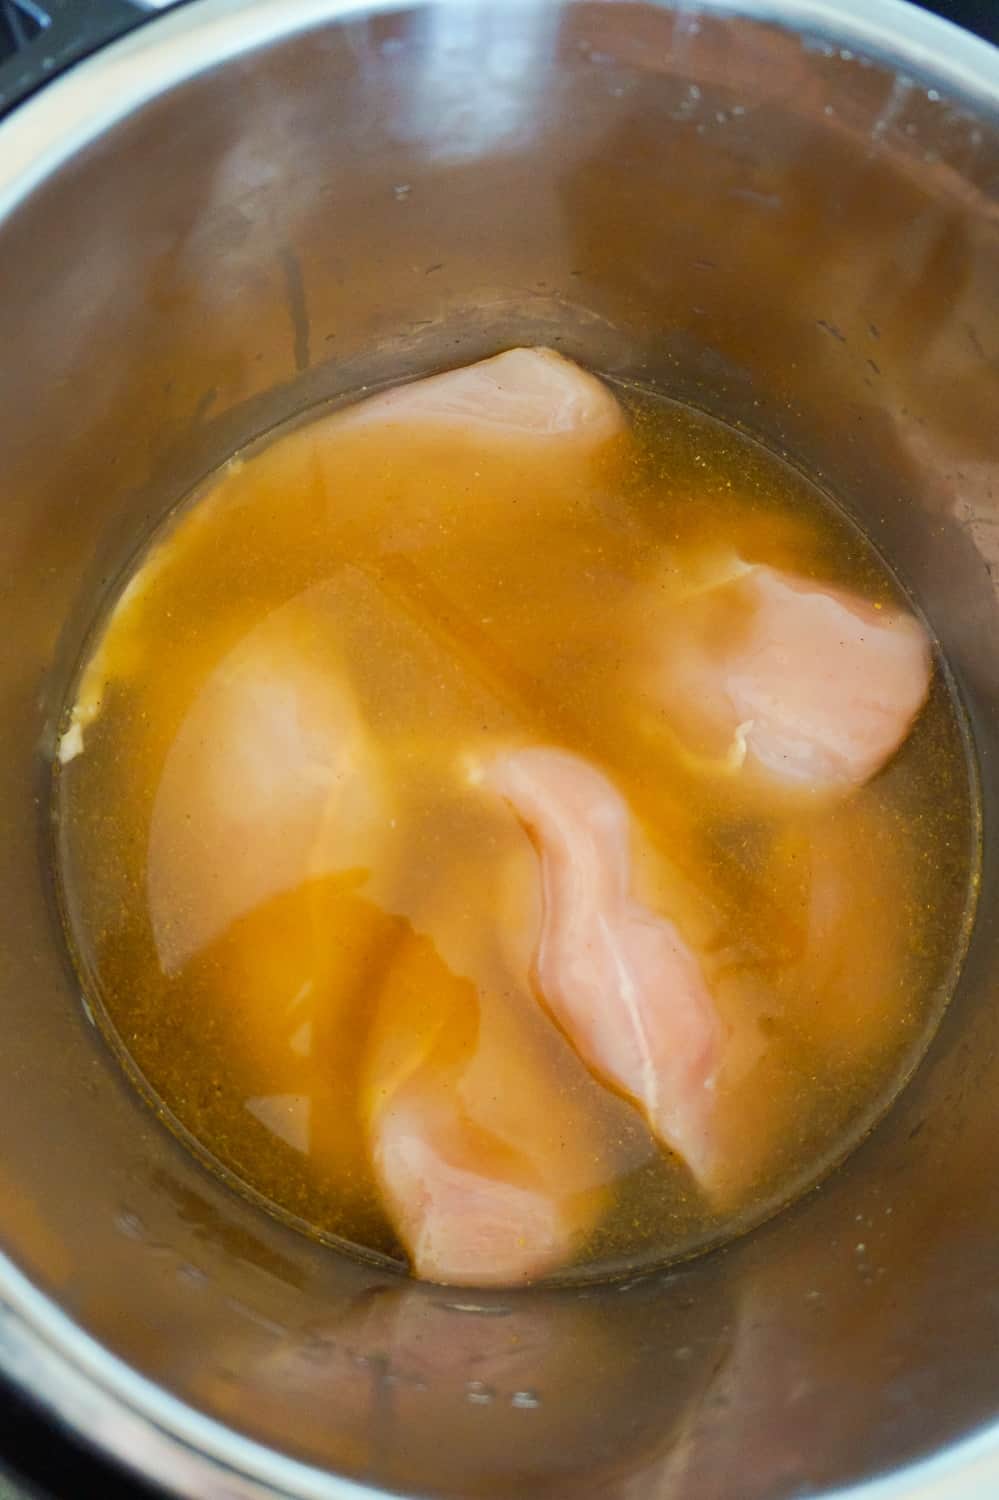 Raw chicken breast in liquid in an Instant Pot